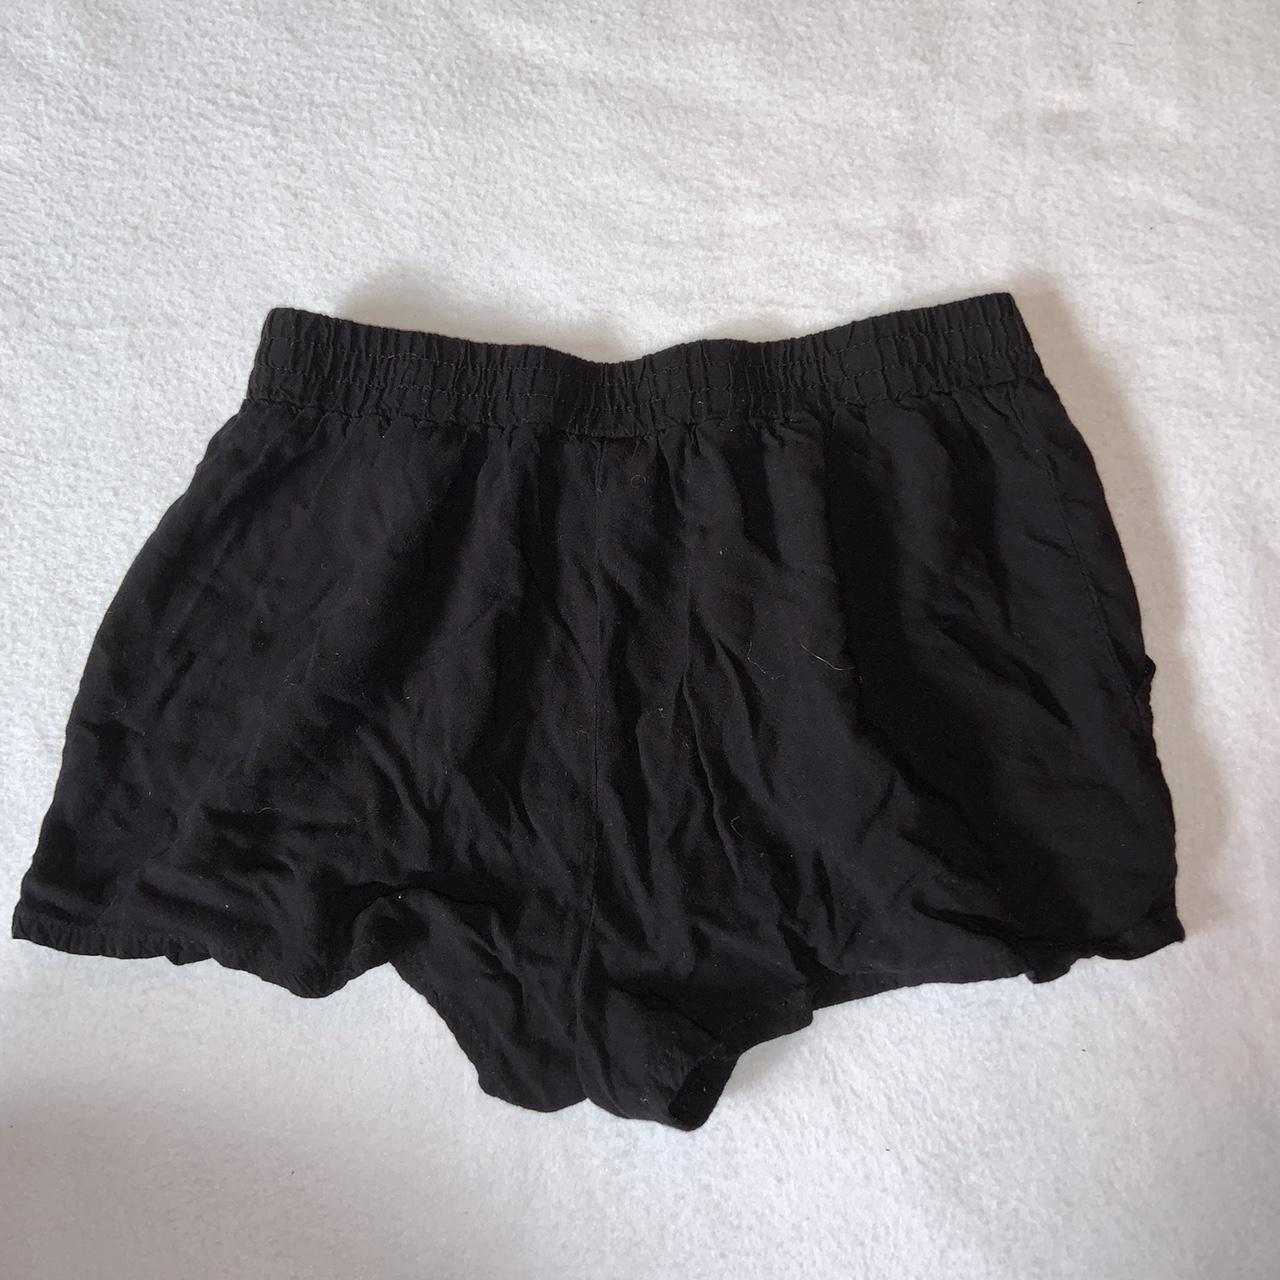 Product Image 3 - black thin shorts
size: small 
brand: